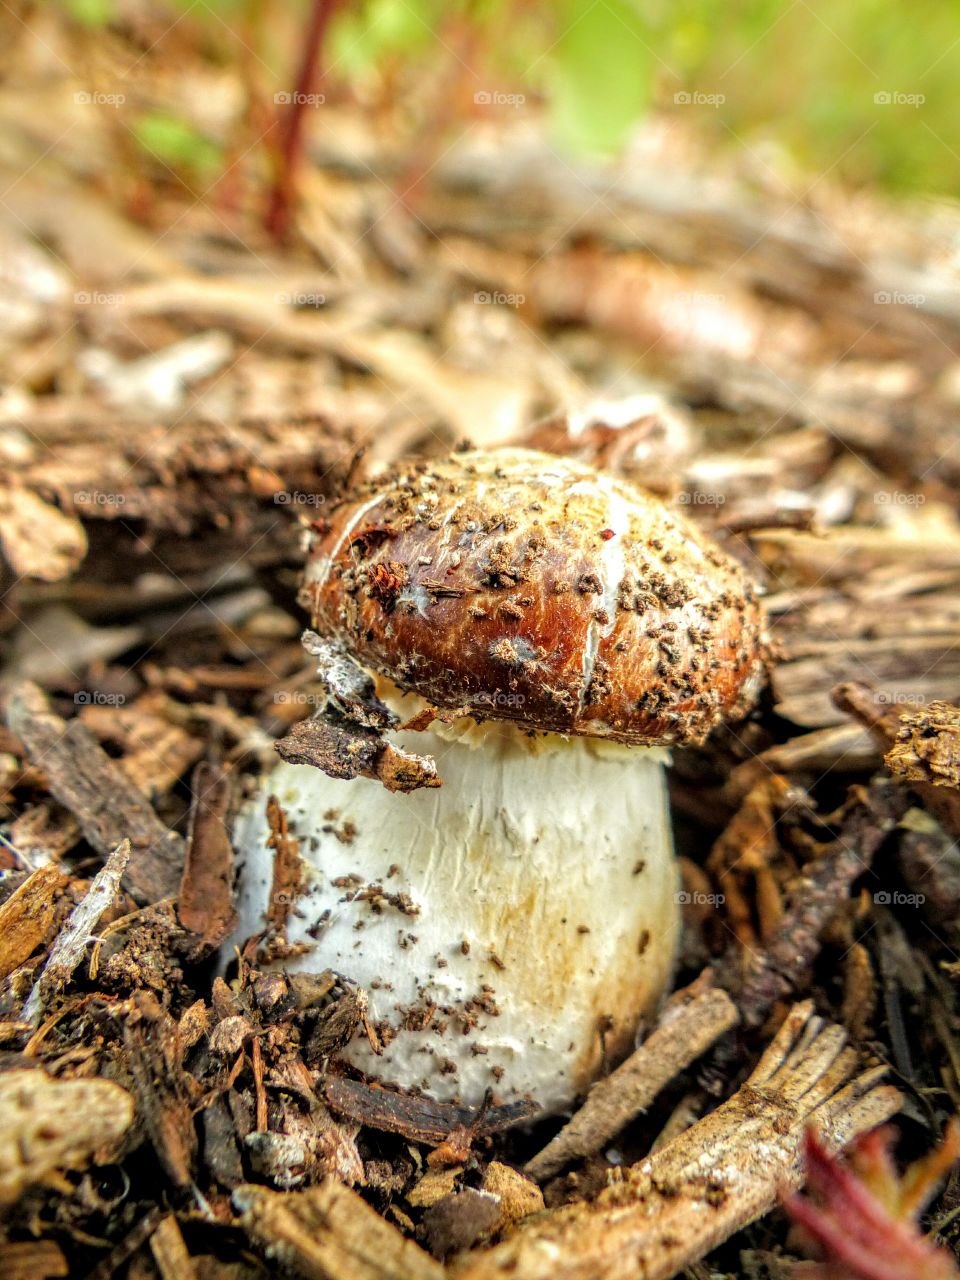 winecap mushroom